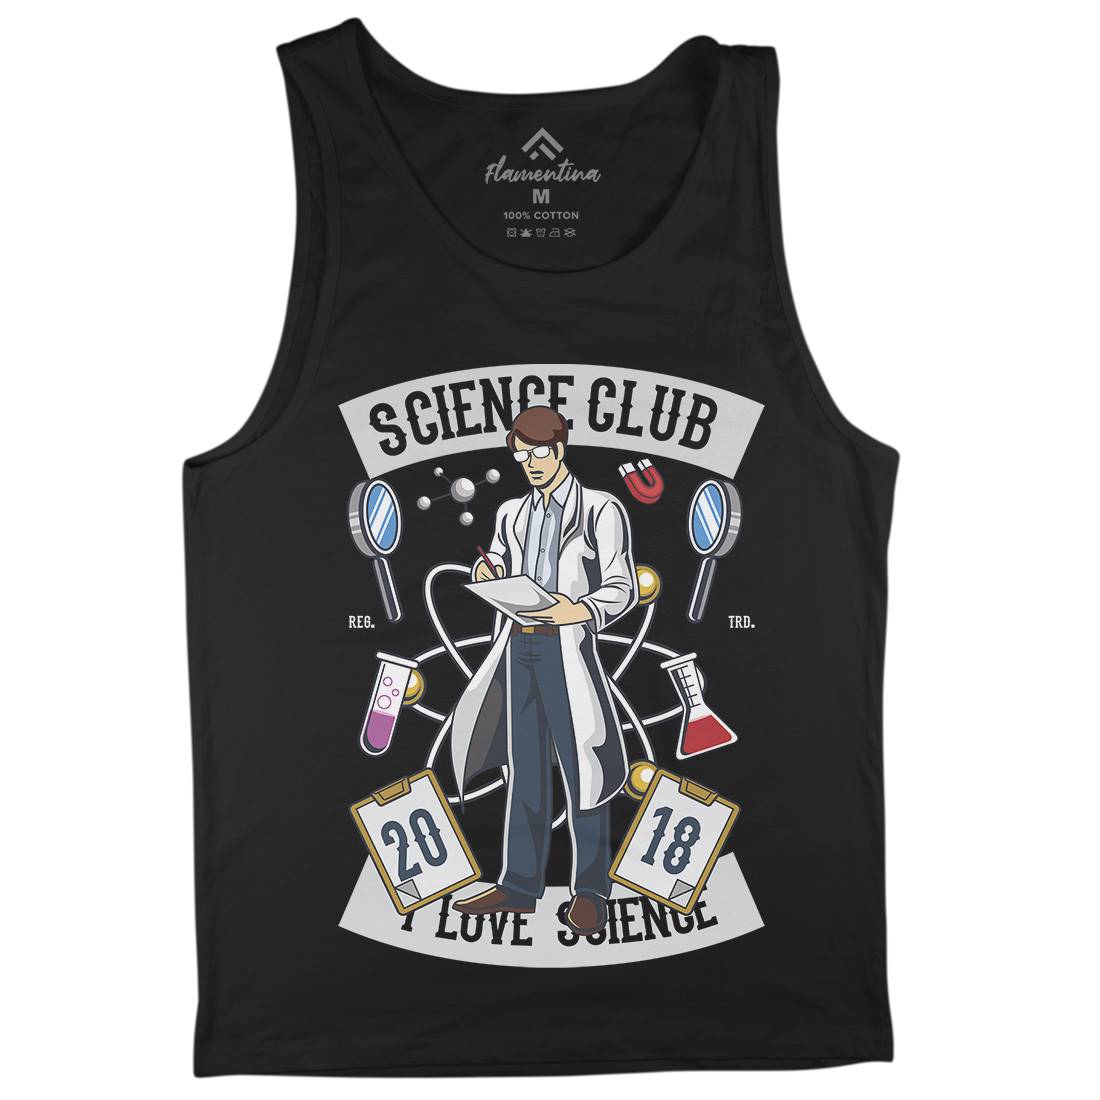 Club I Love Mens Tank Top Vest Science C434